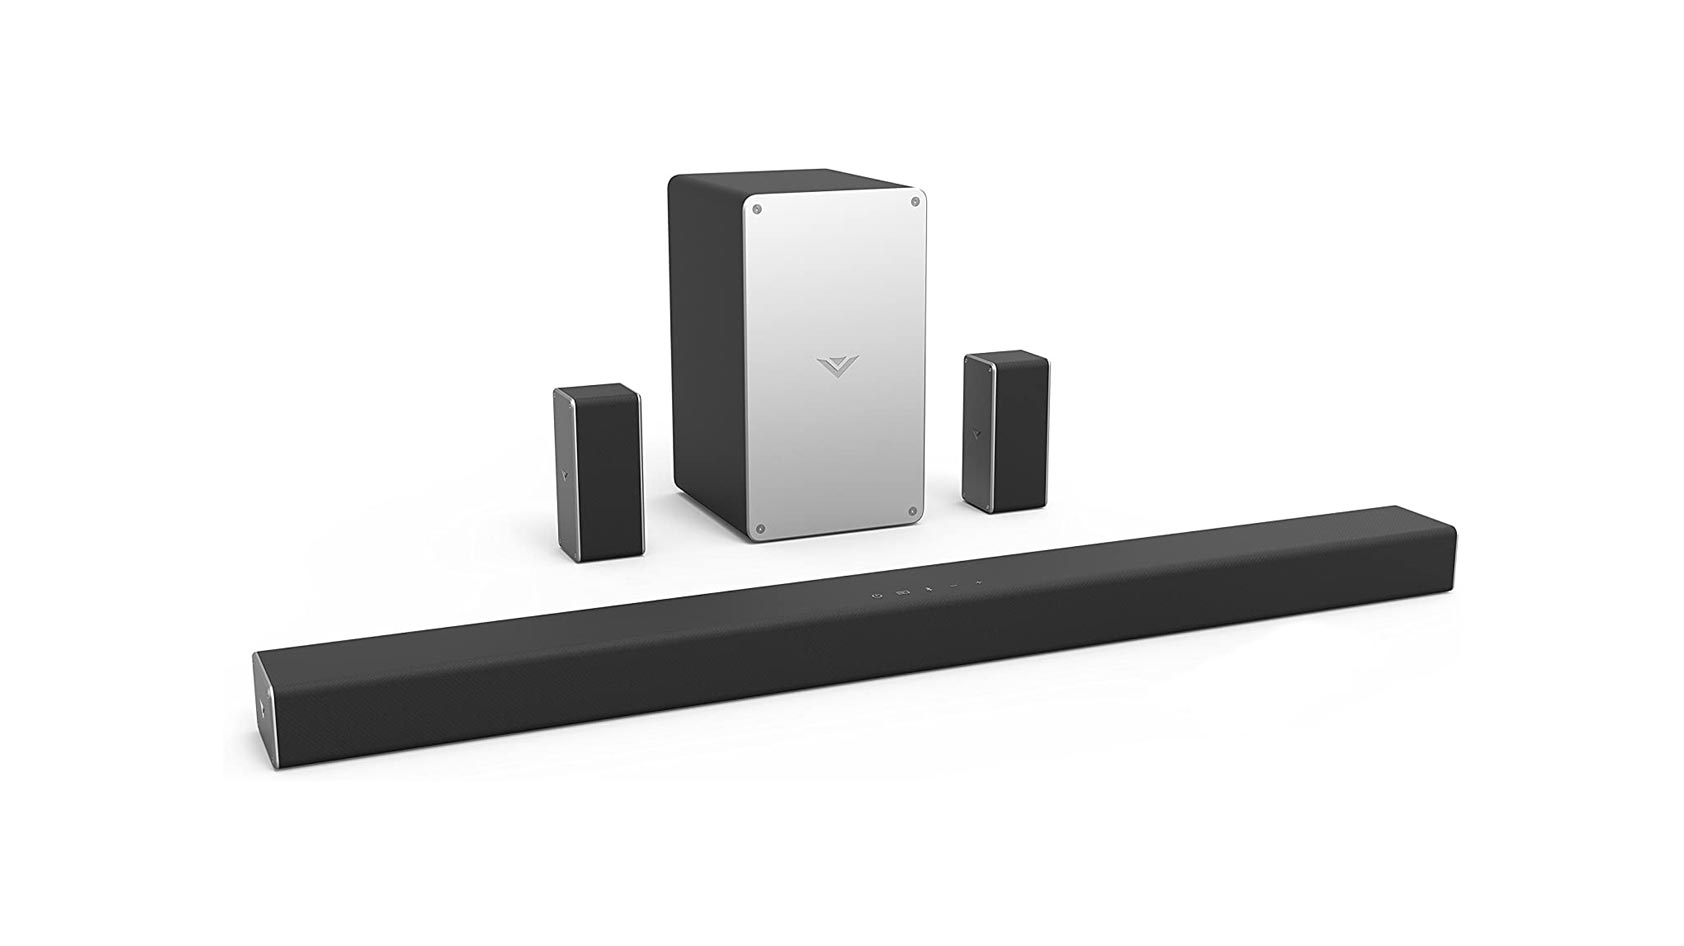 The Vizio SB3651-F6 home theater sound bar system on a white backdrop.